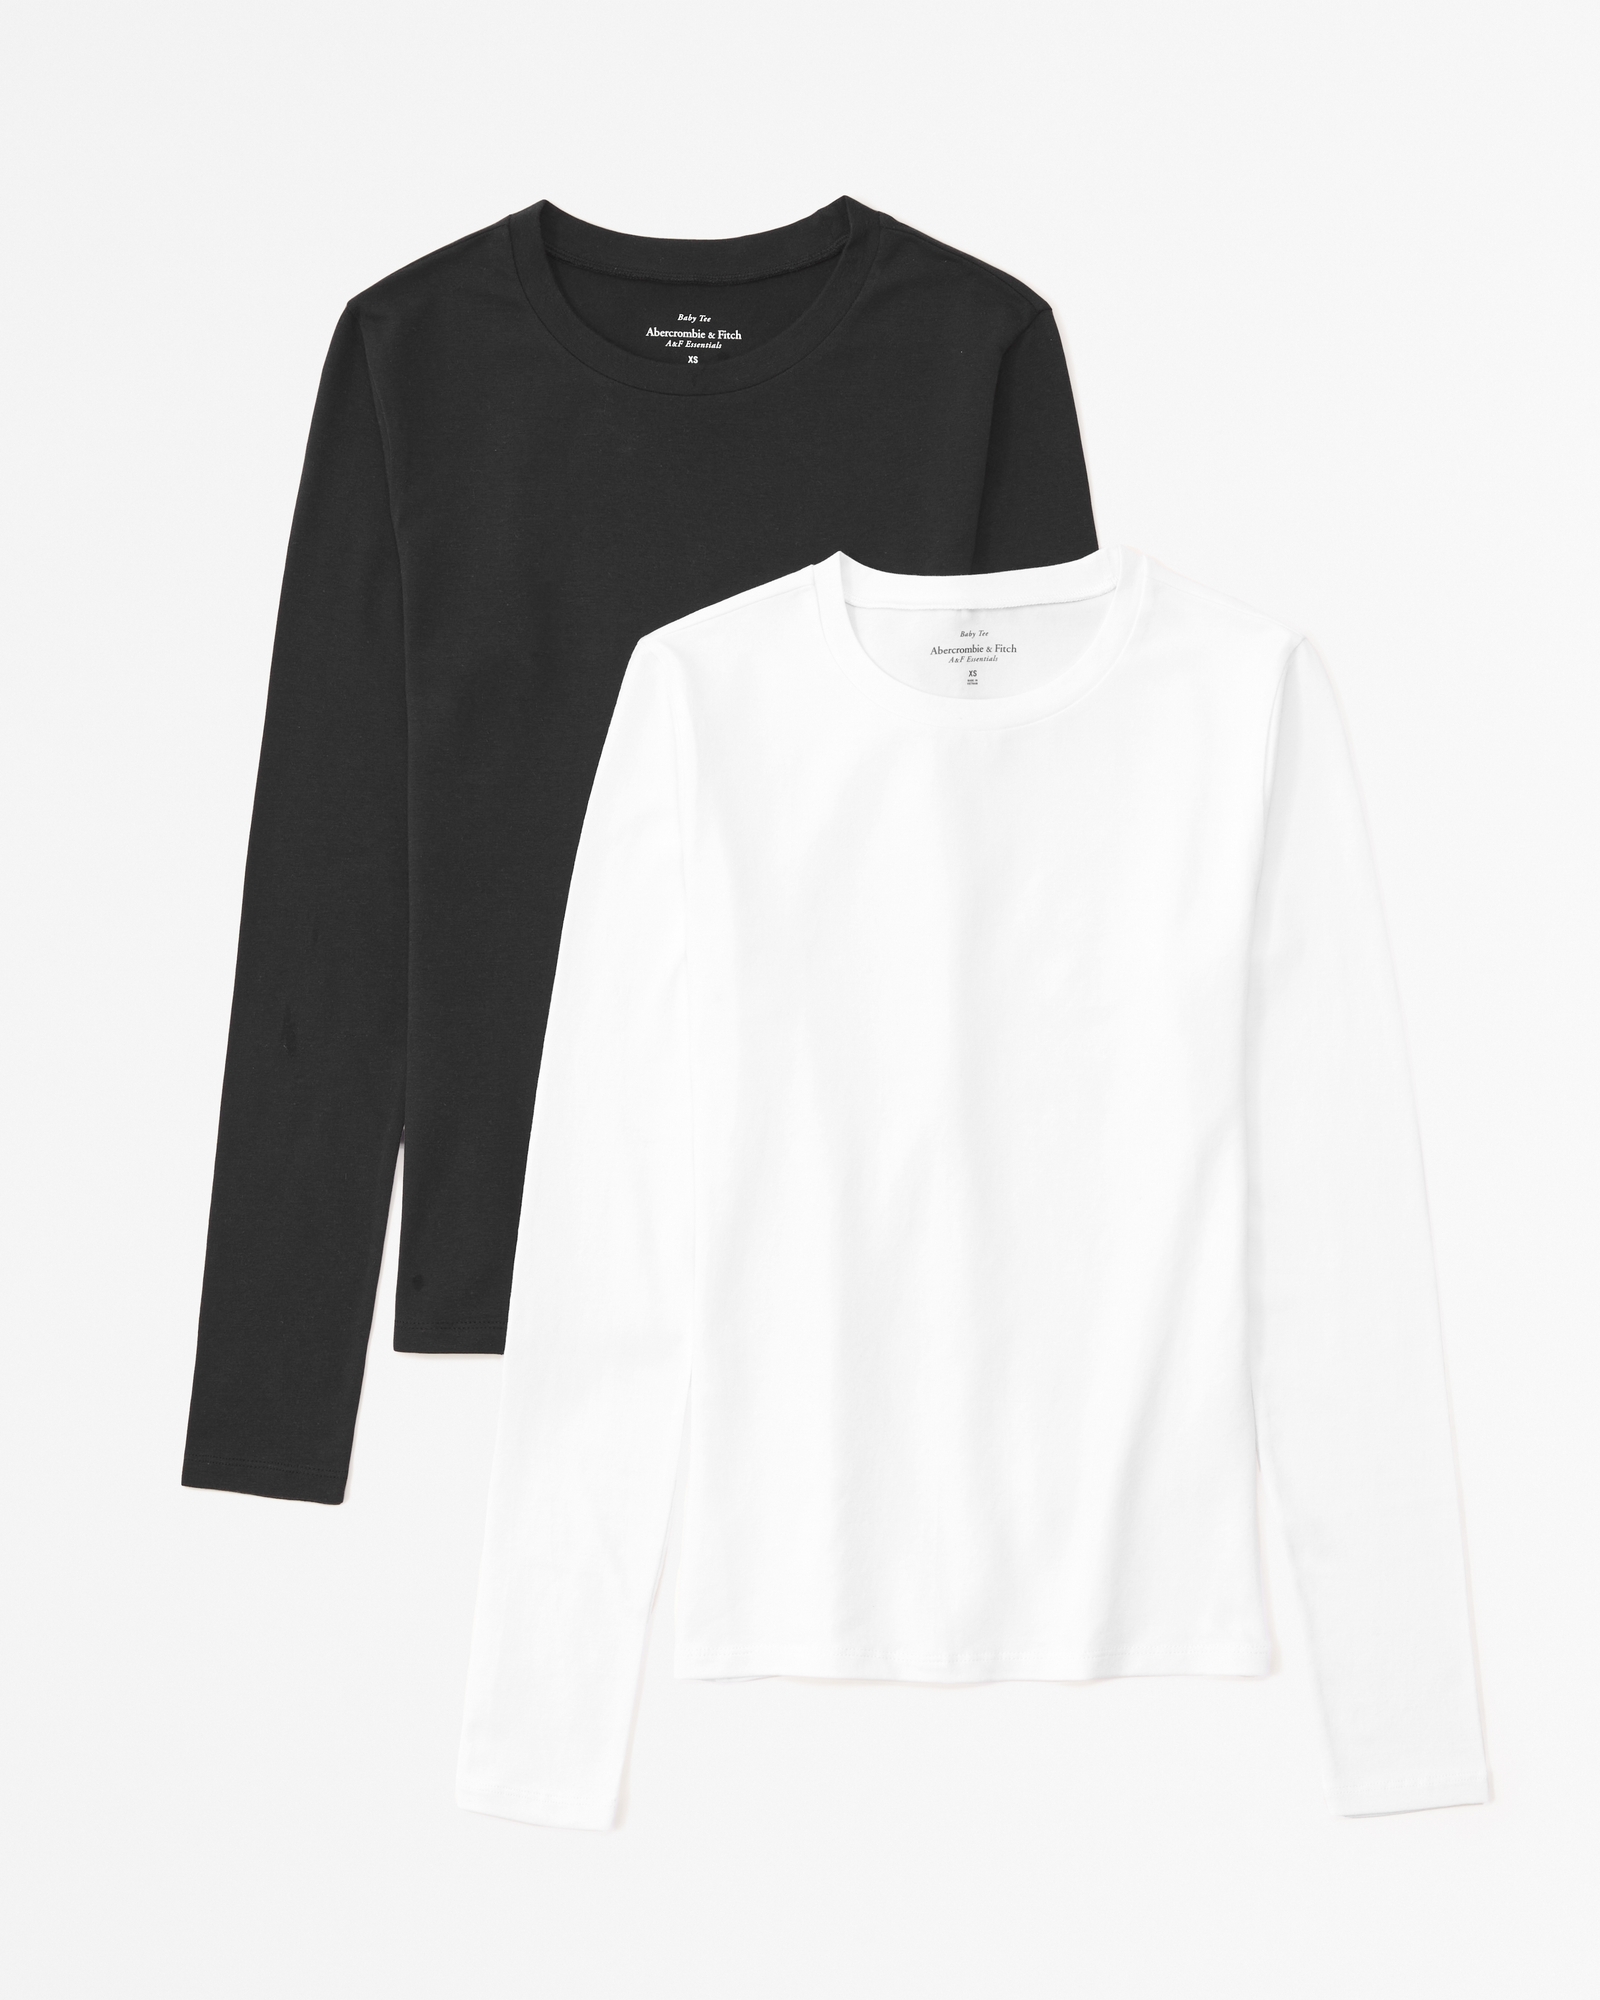 Hollister Womens White Cotton Basic T-Shirt Size XS Round Neck – Preworn Ltd